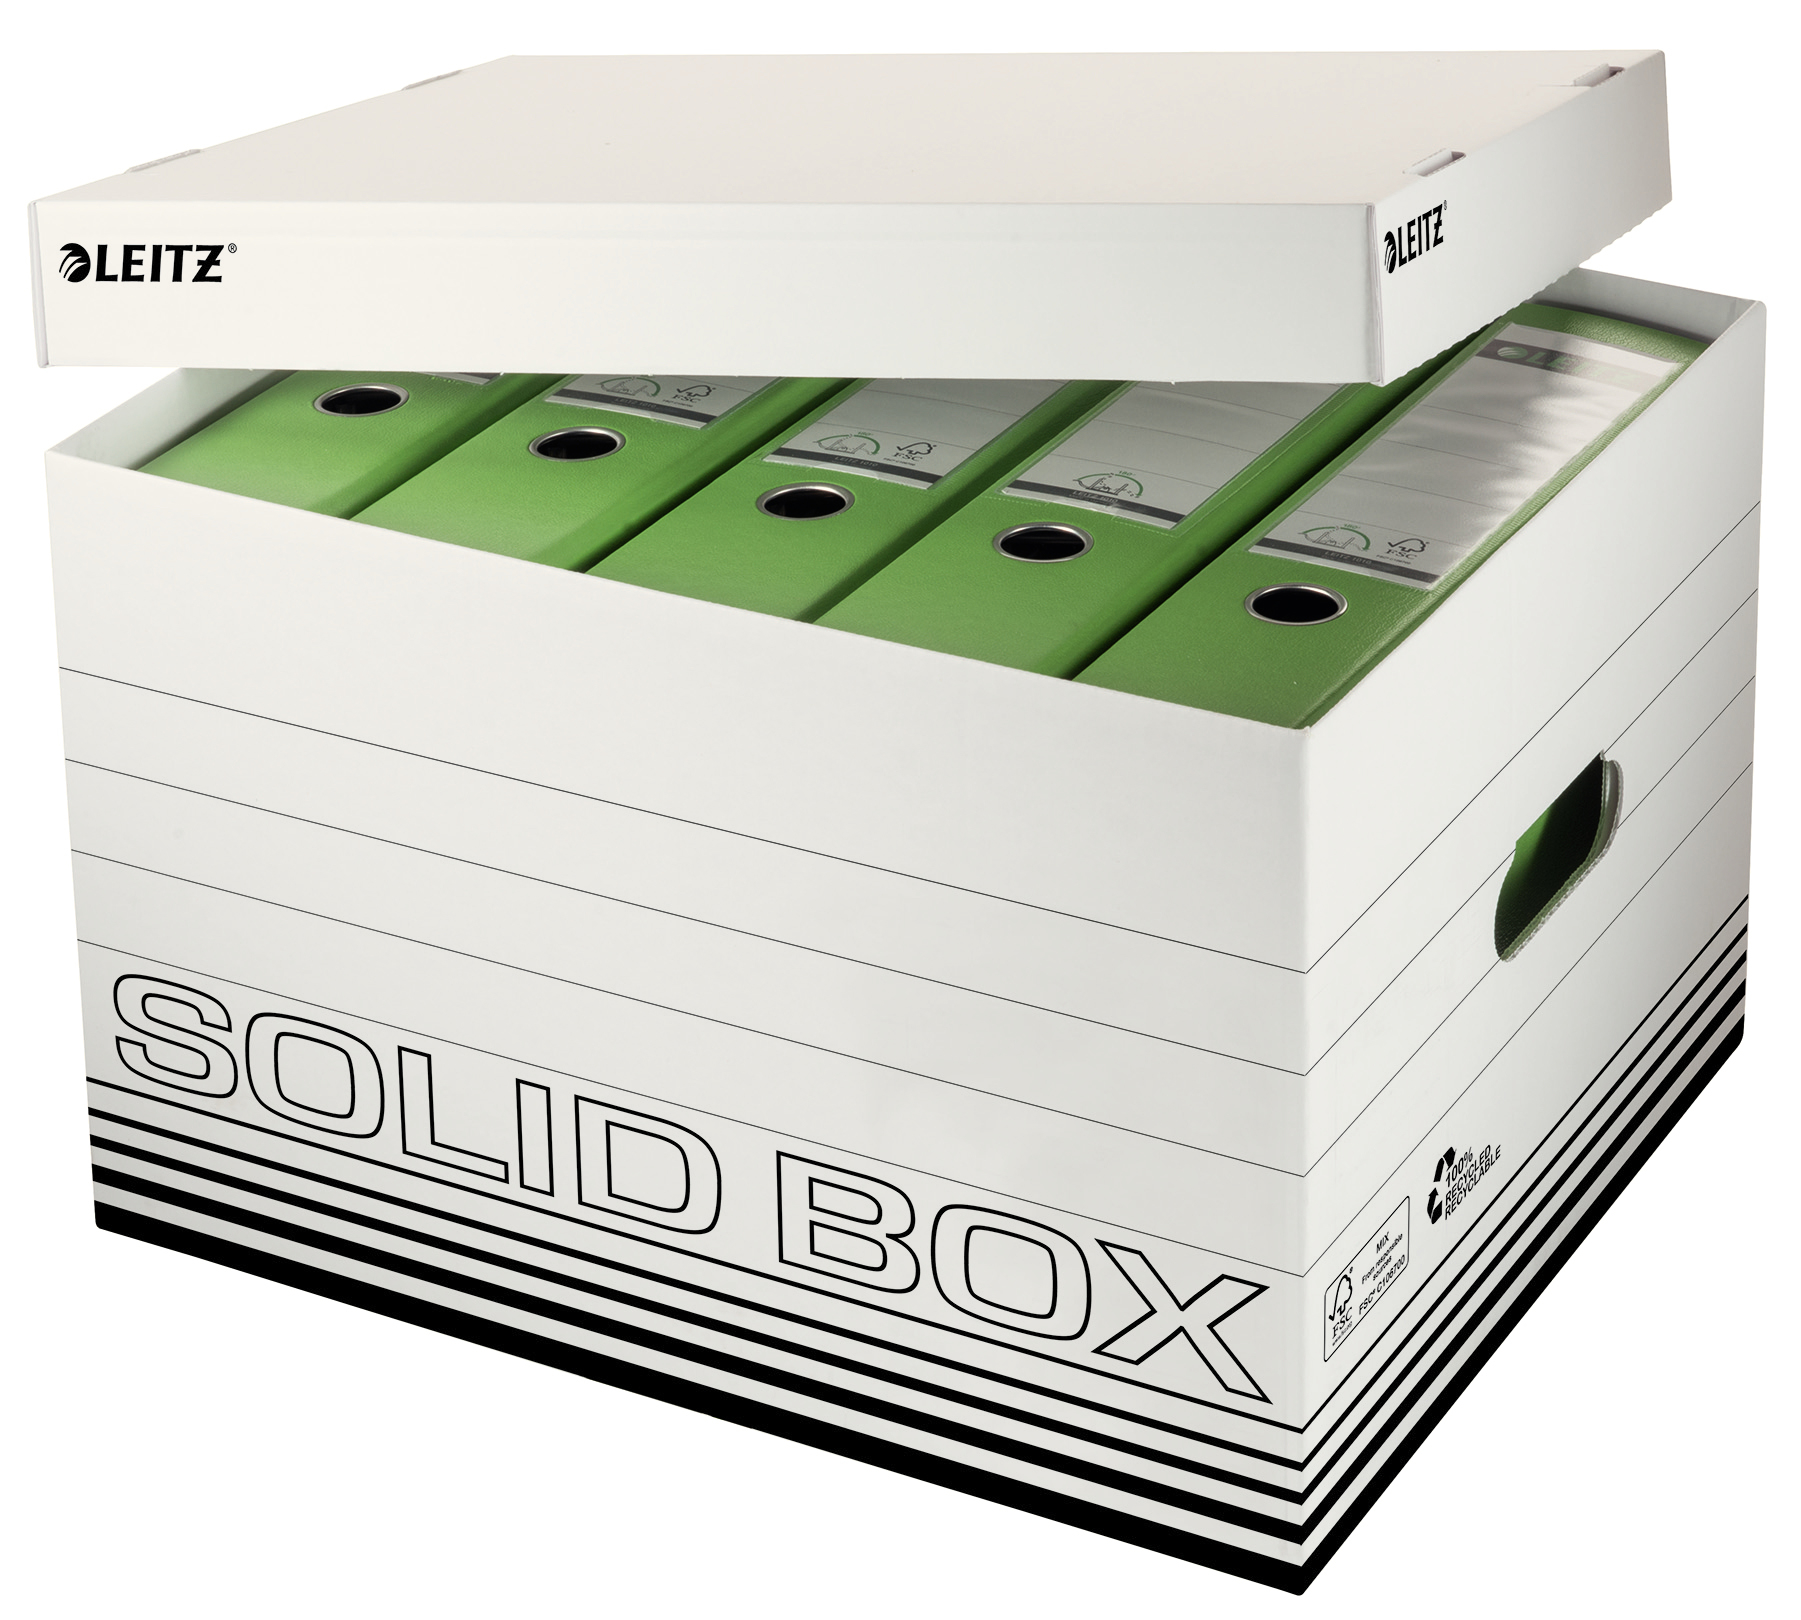 LEITZ Solid Box L 6119-00-01 blanc 346x305x450mm